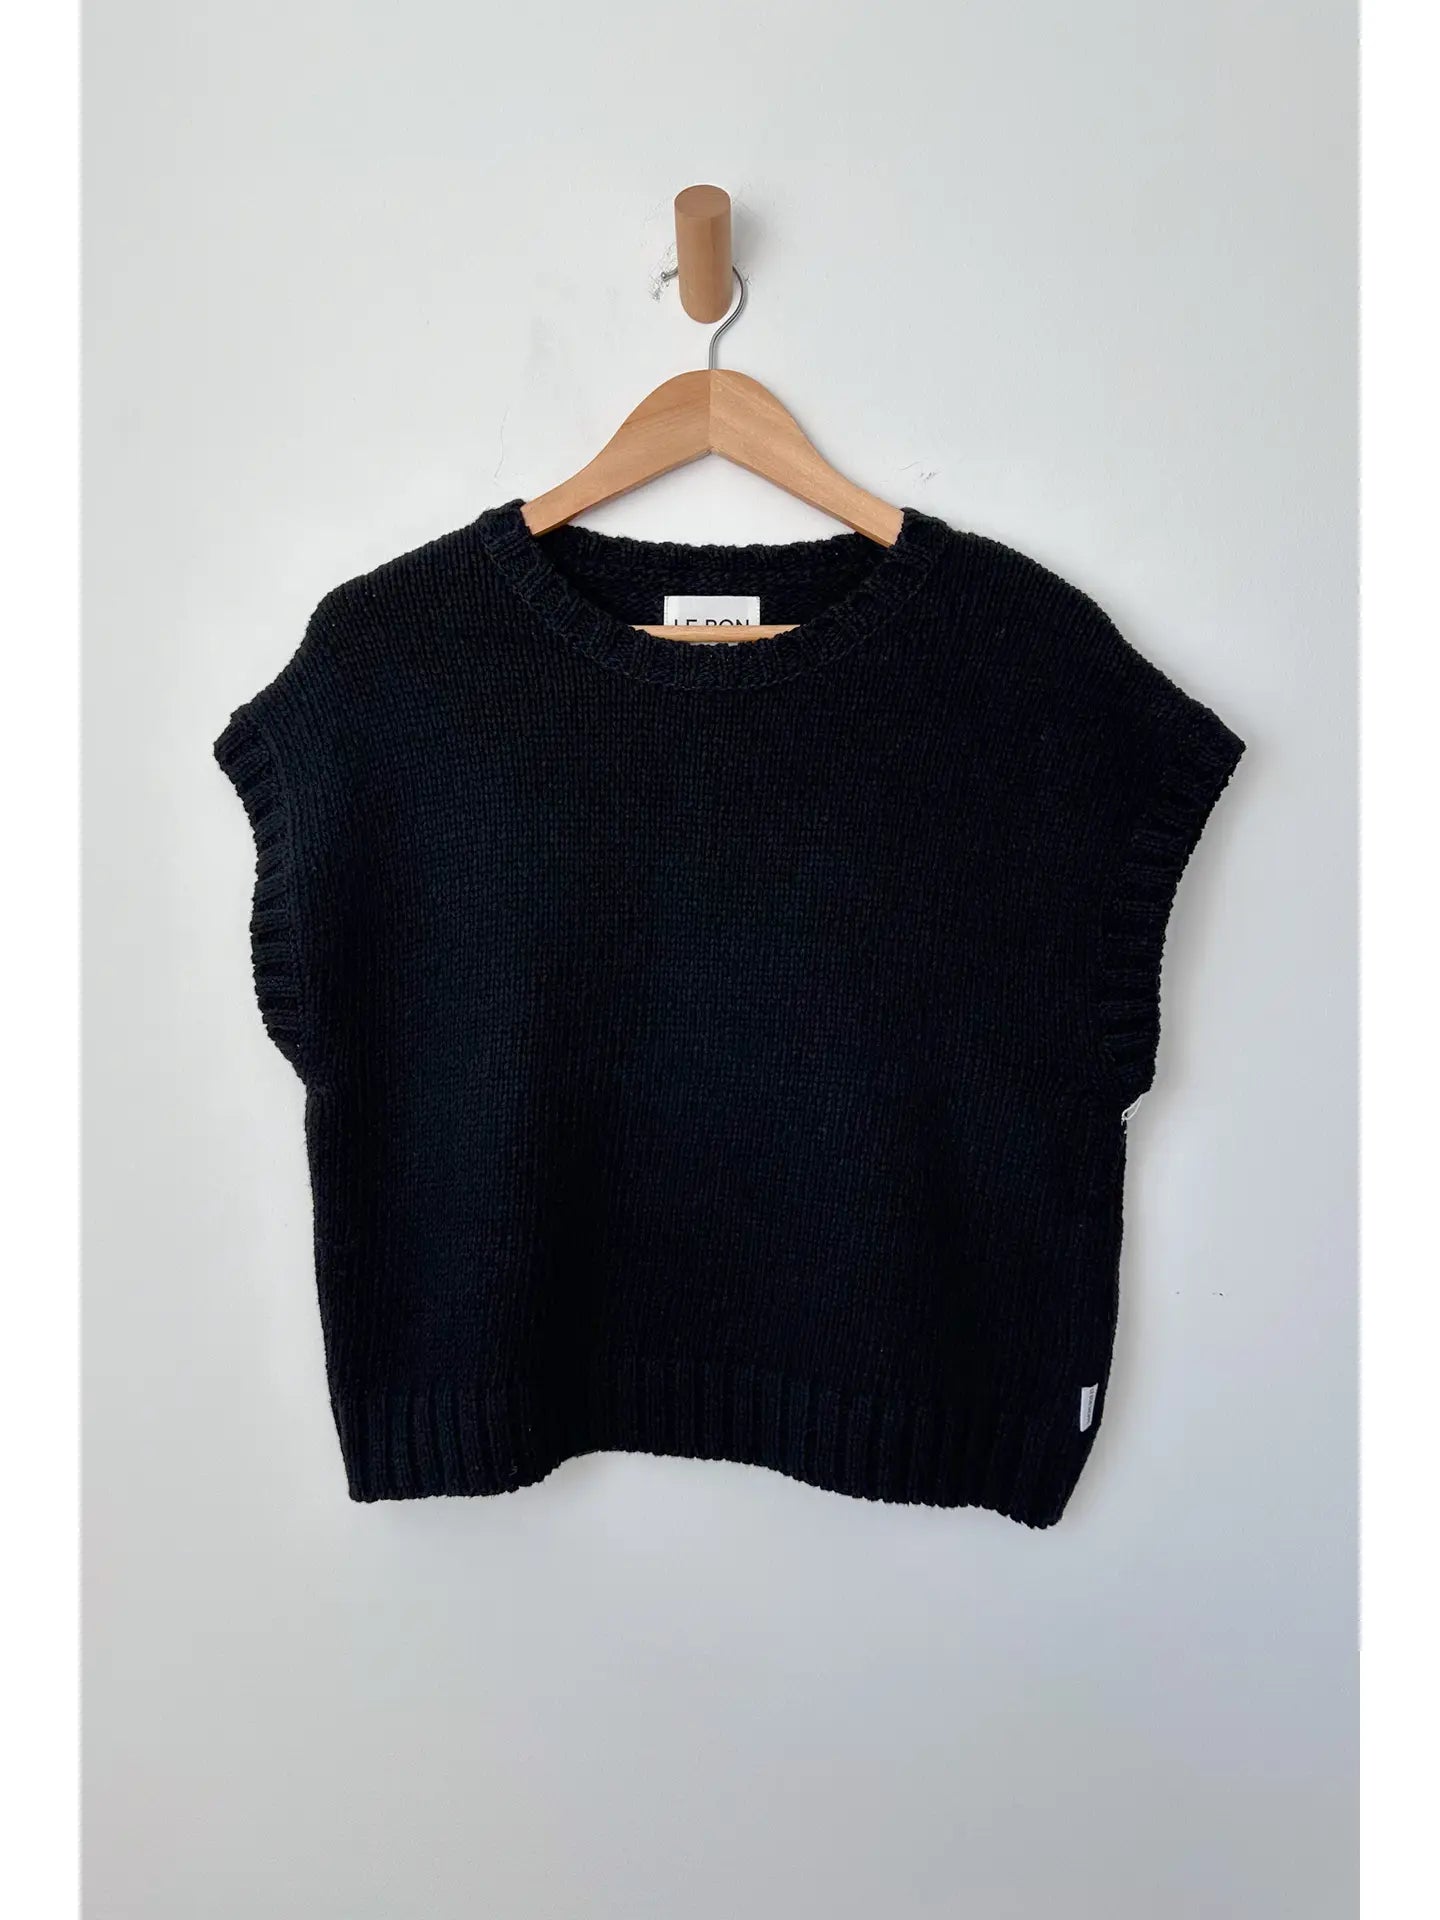 Pierre Cotton Sweater In Black